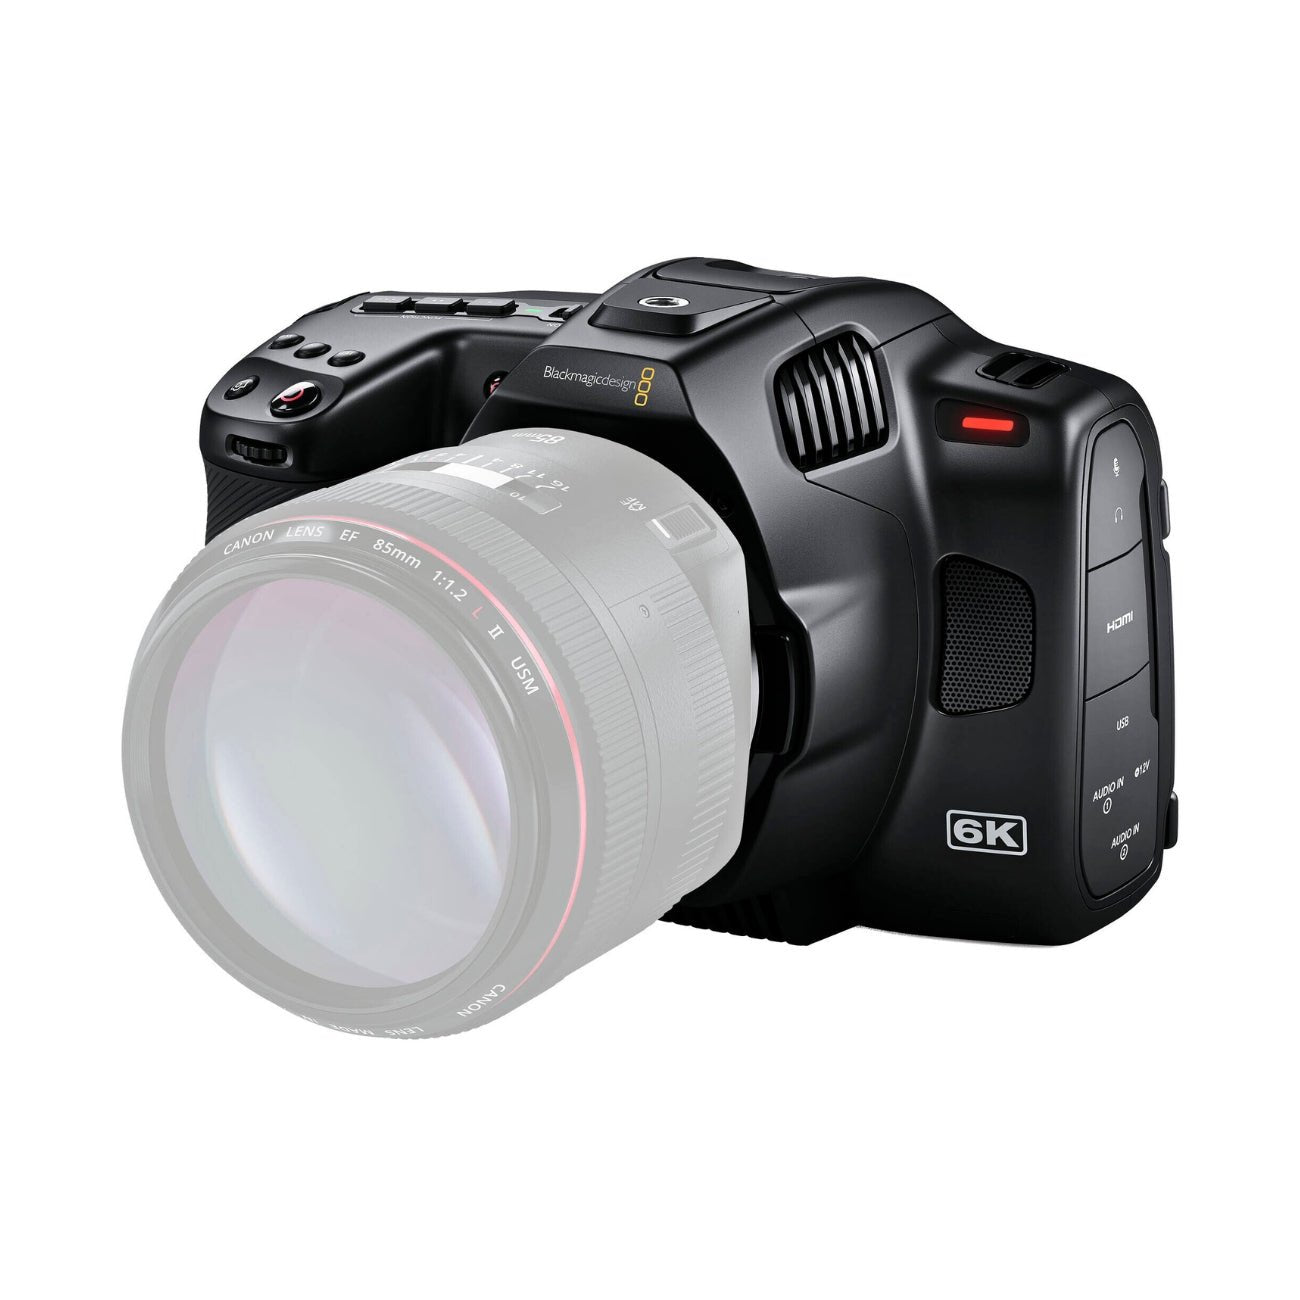 Blackmagic Design Pocket Cinema Camera 6K Pro with DaVinci Resolve Studio - Without lens